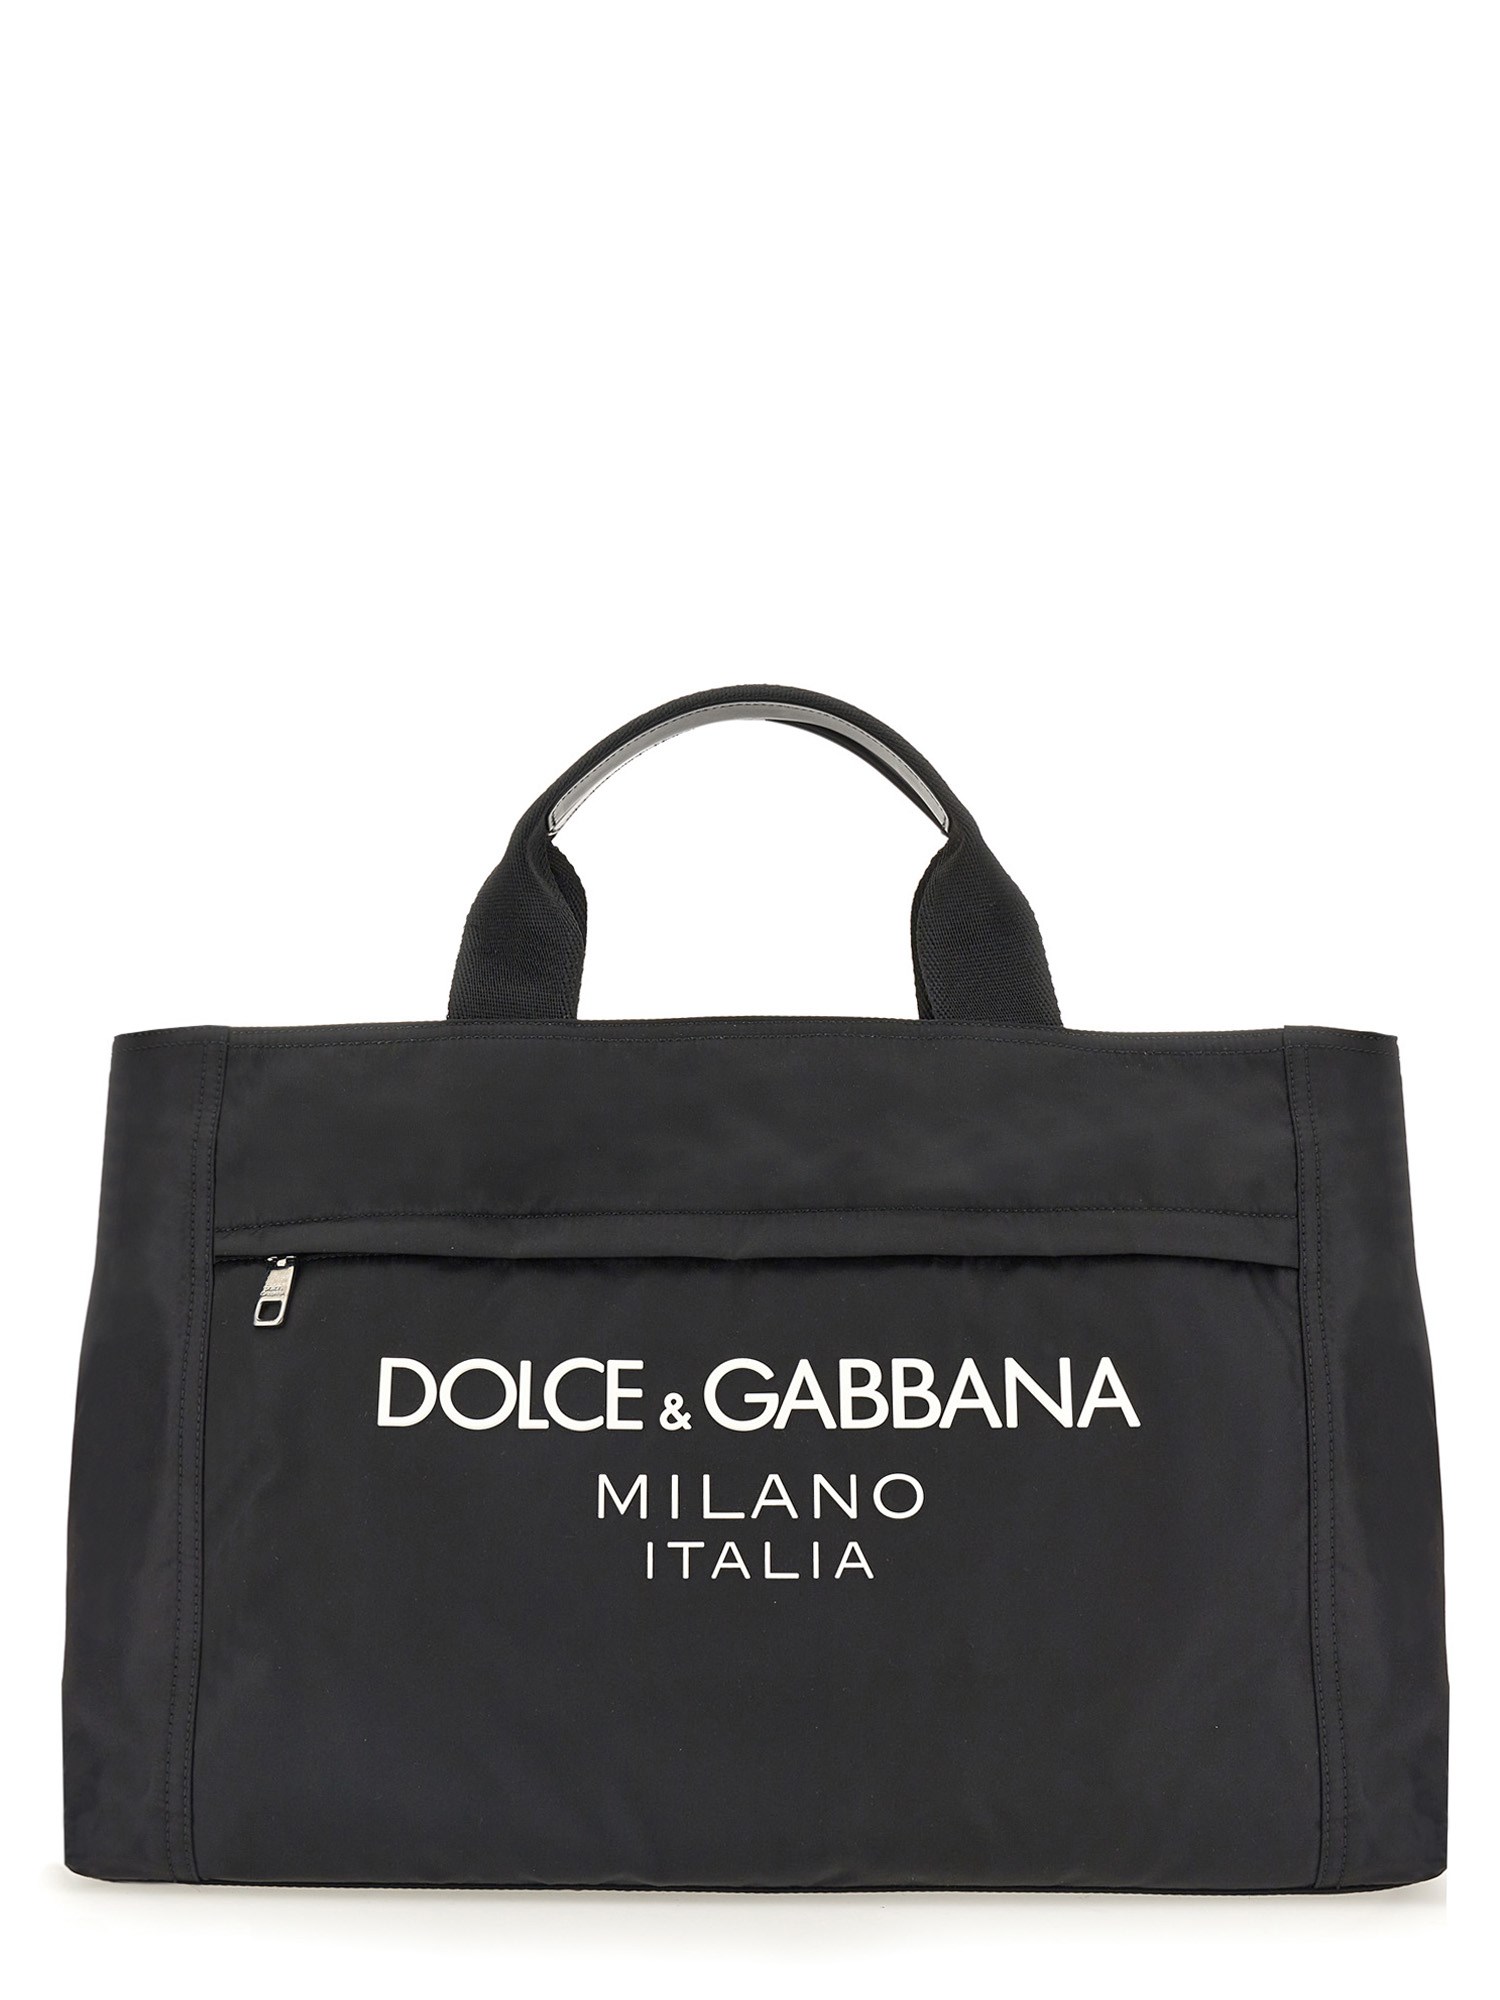 dolce & gabbana nylon duffle bag with logo